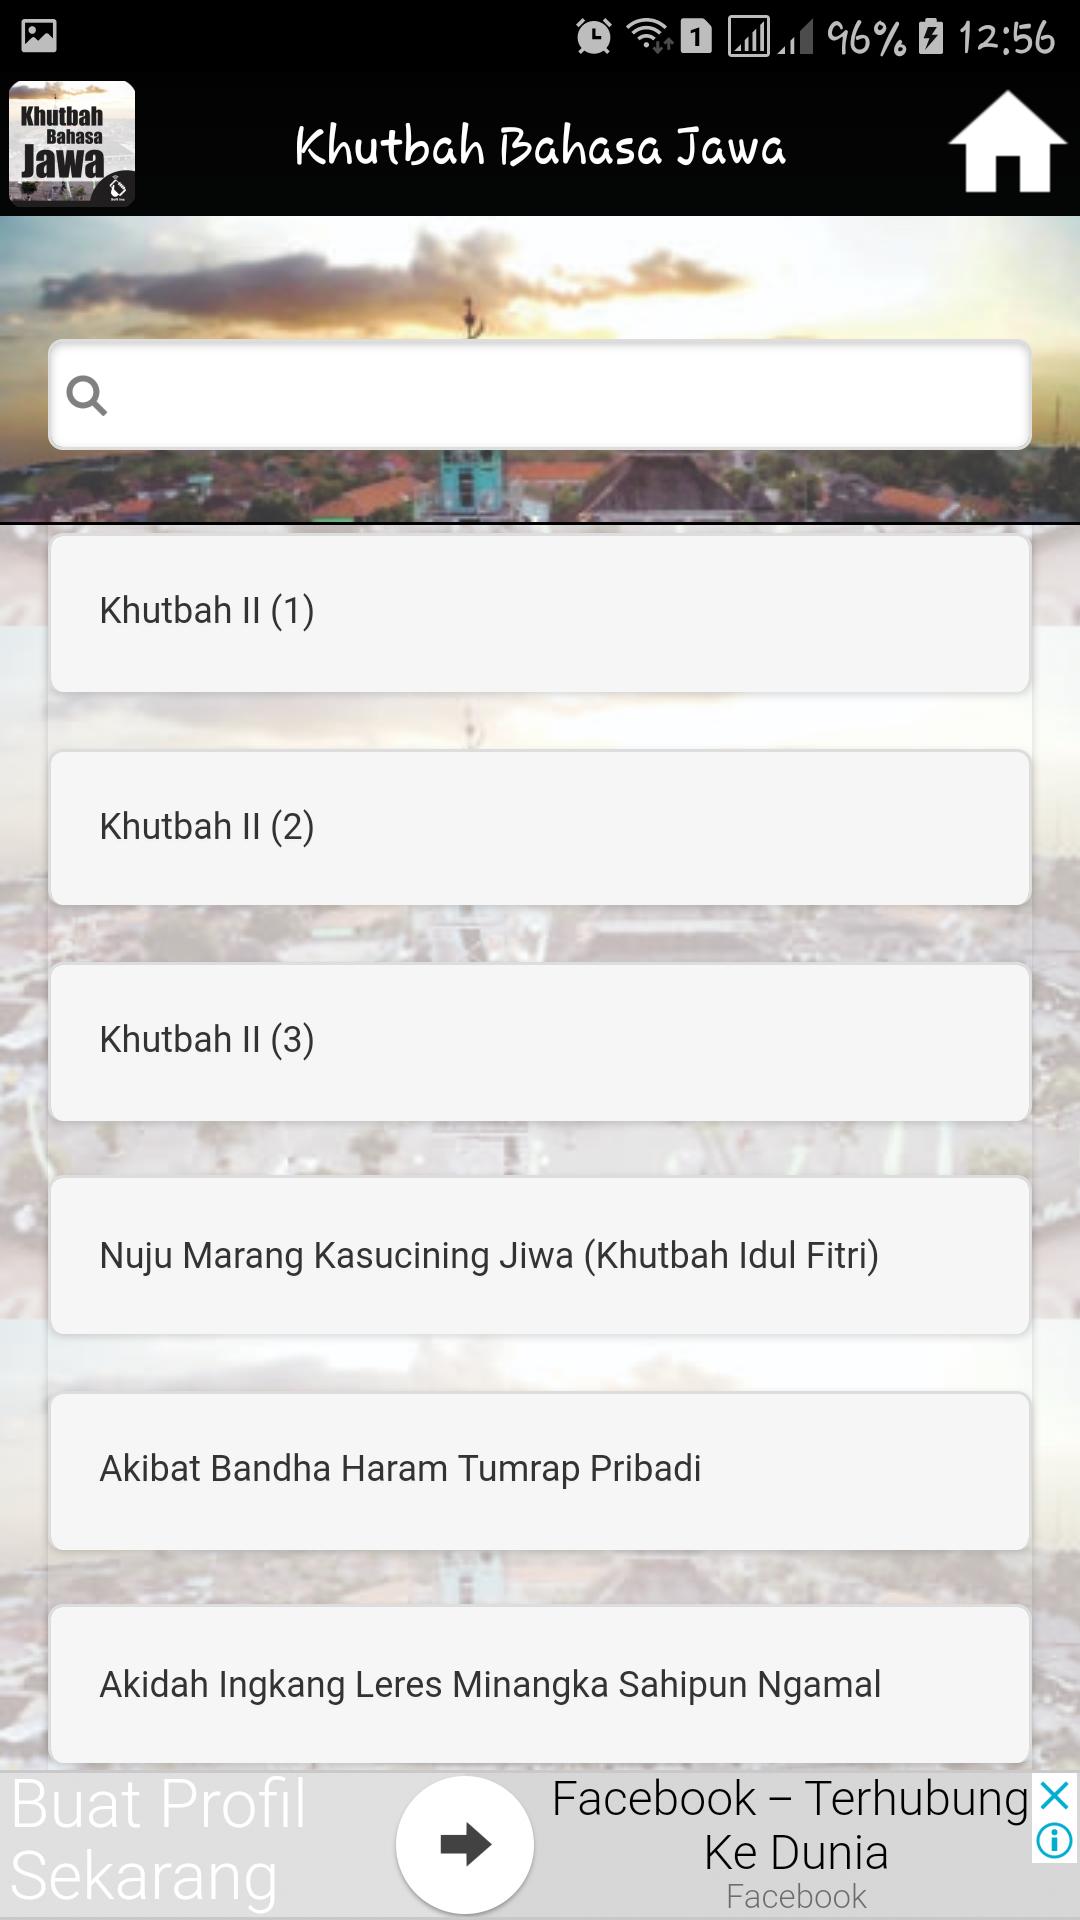 Khutbah Bahasa Jawa Screenshot 10